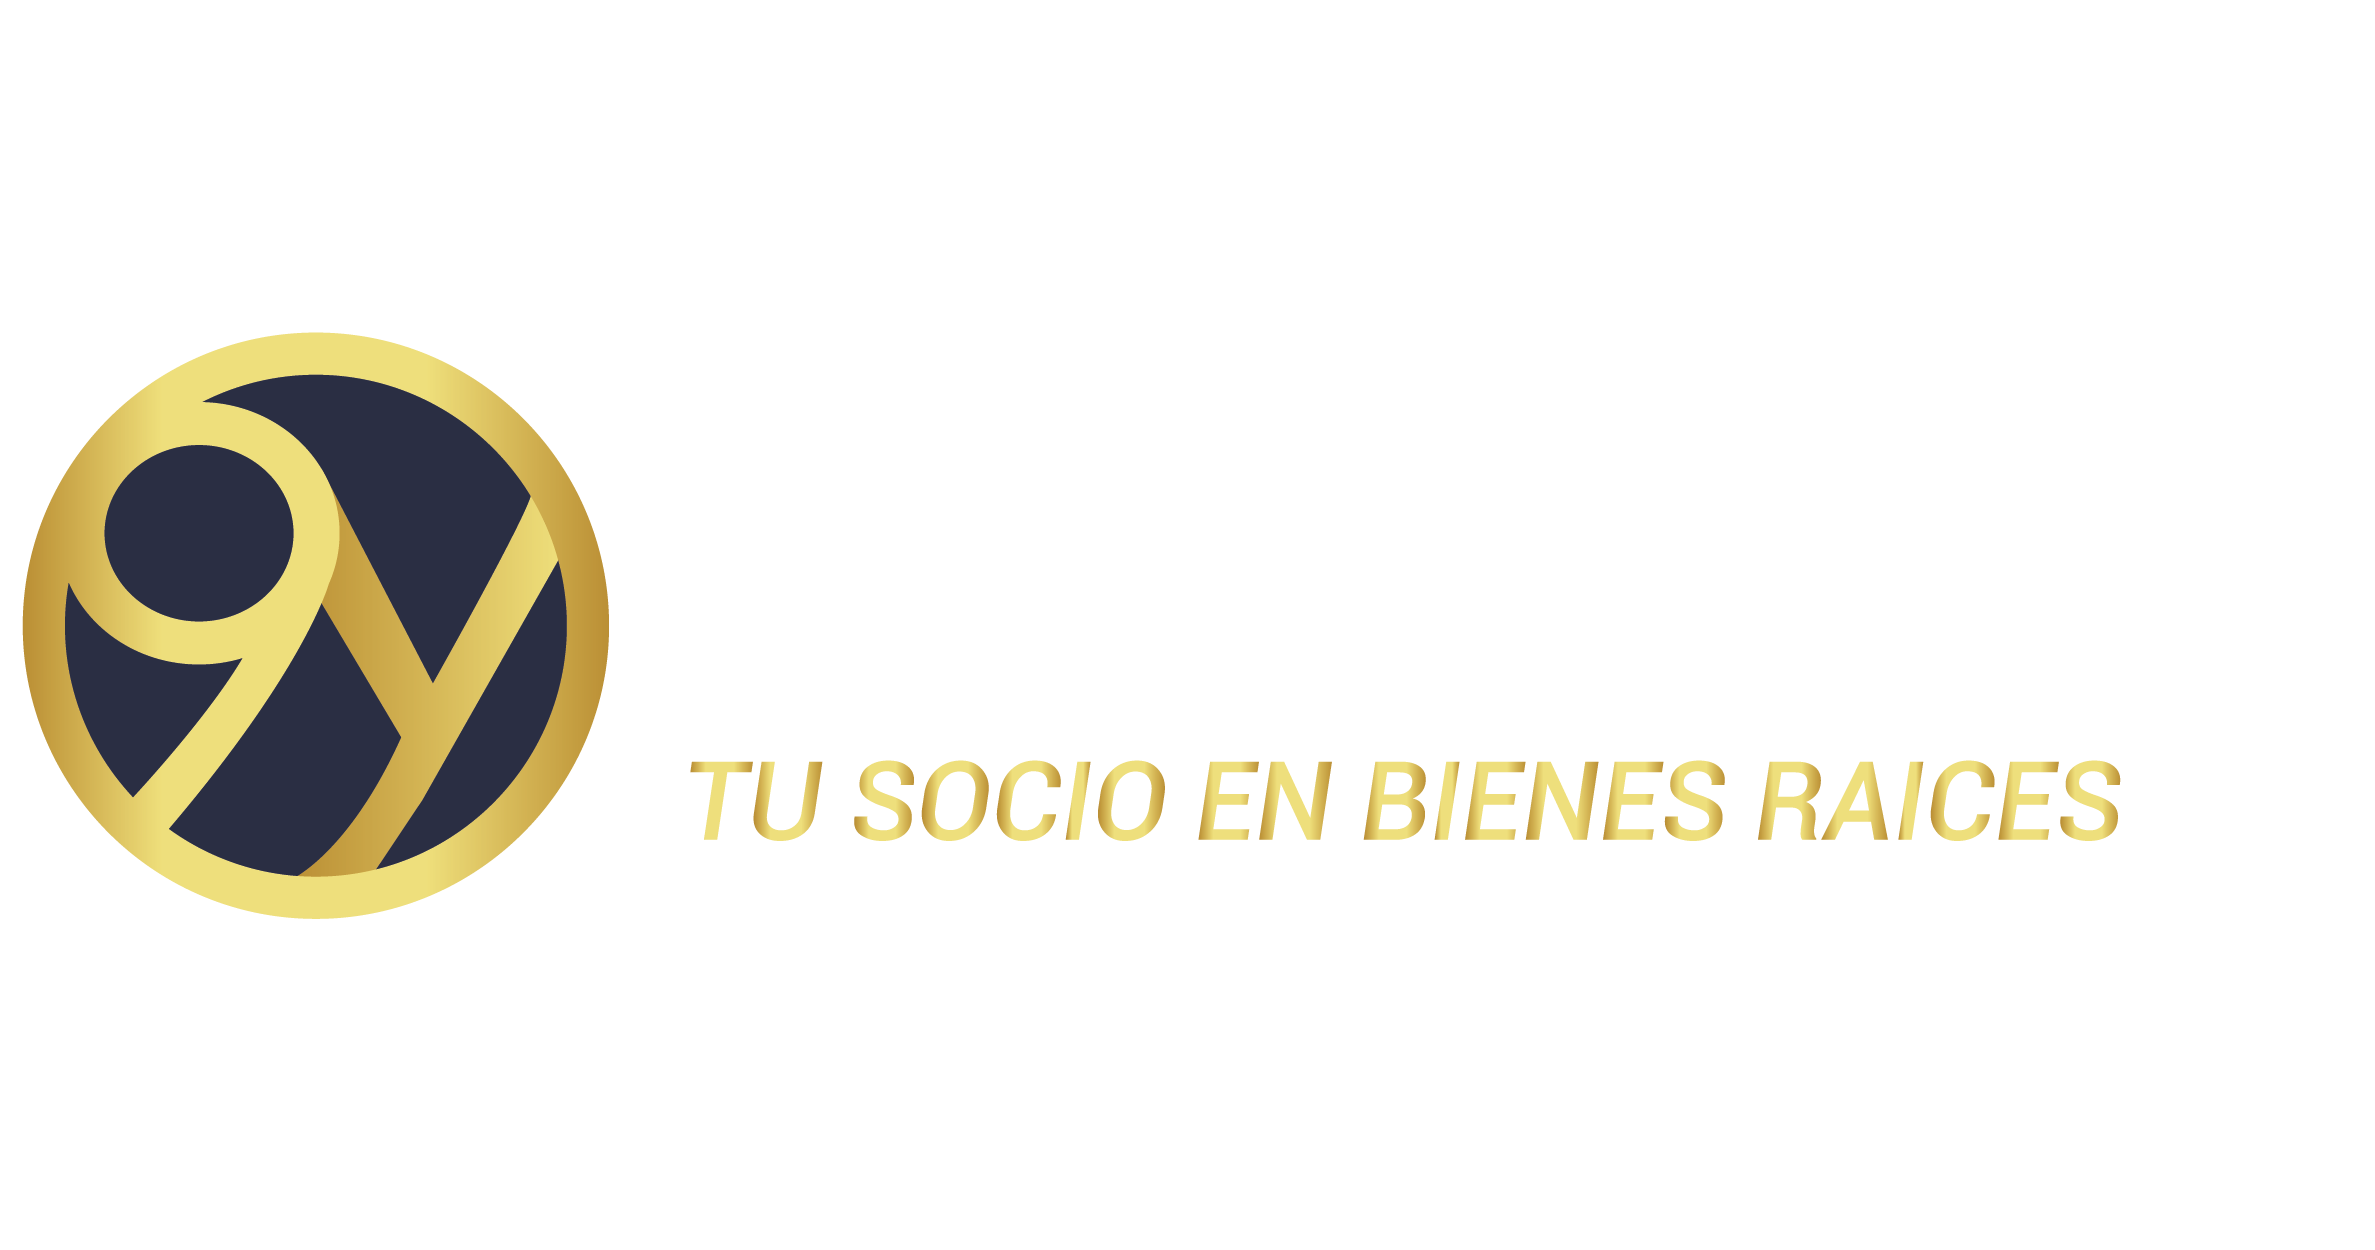 9Y Capital